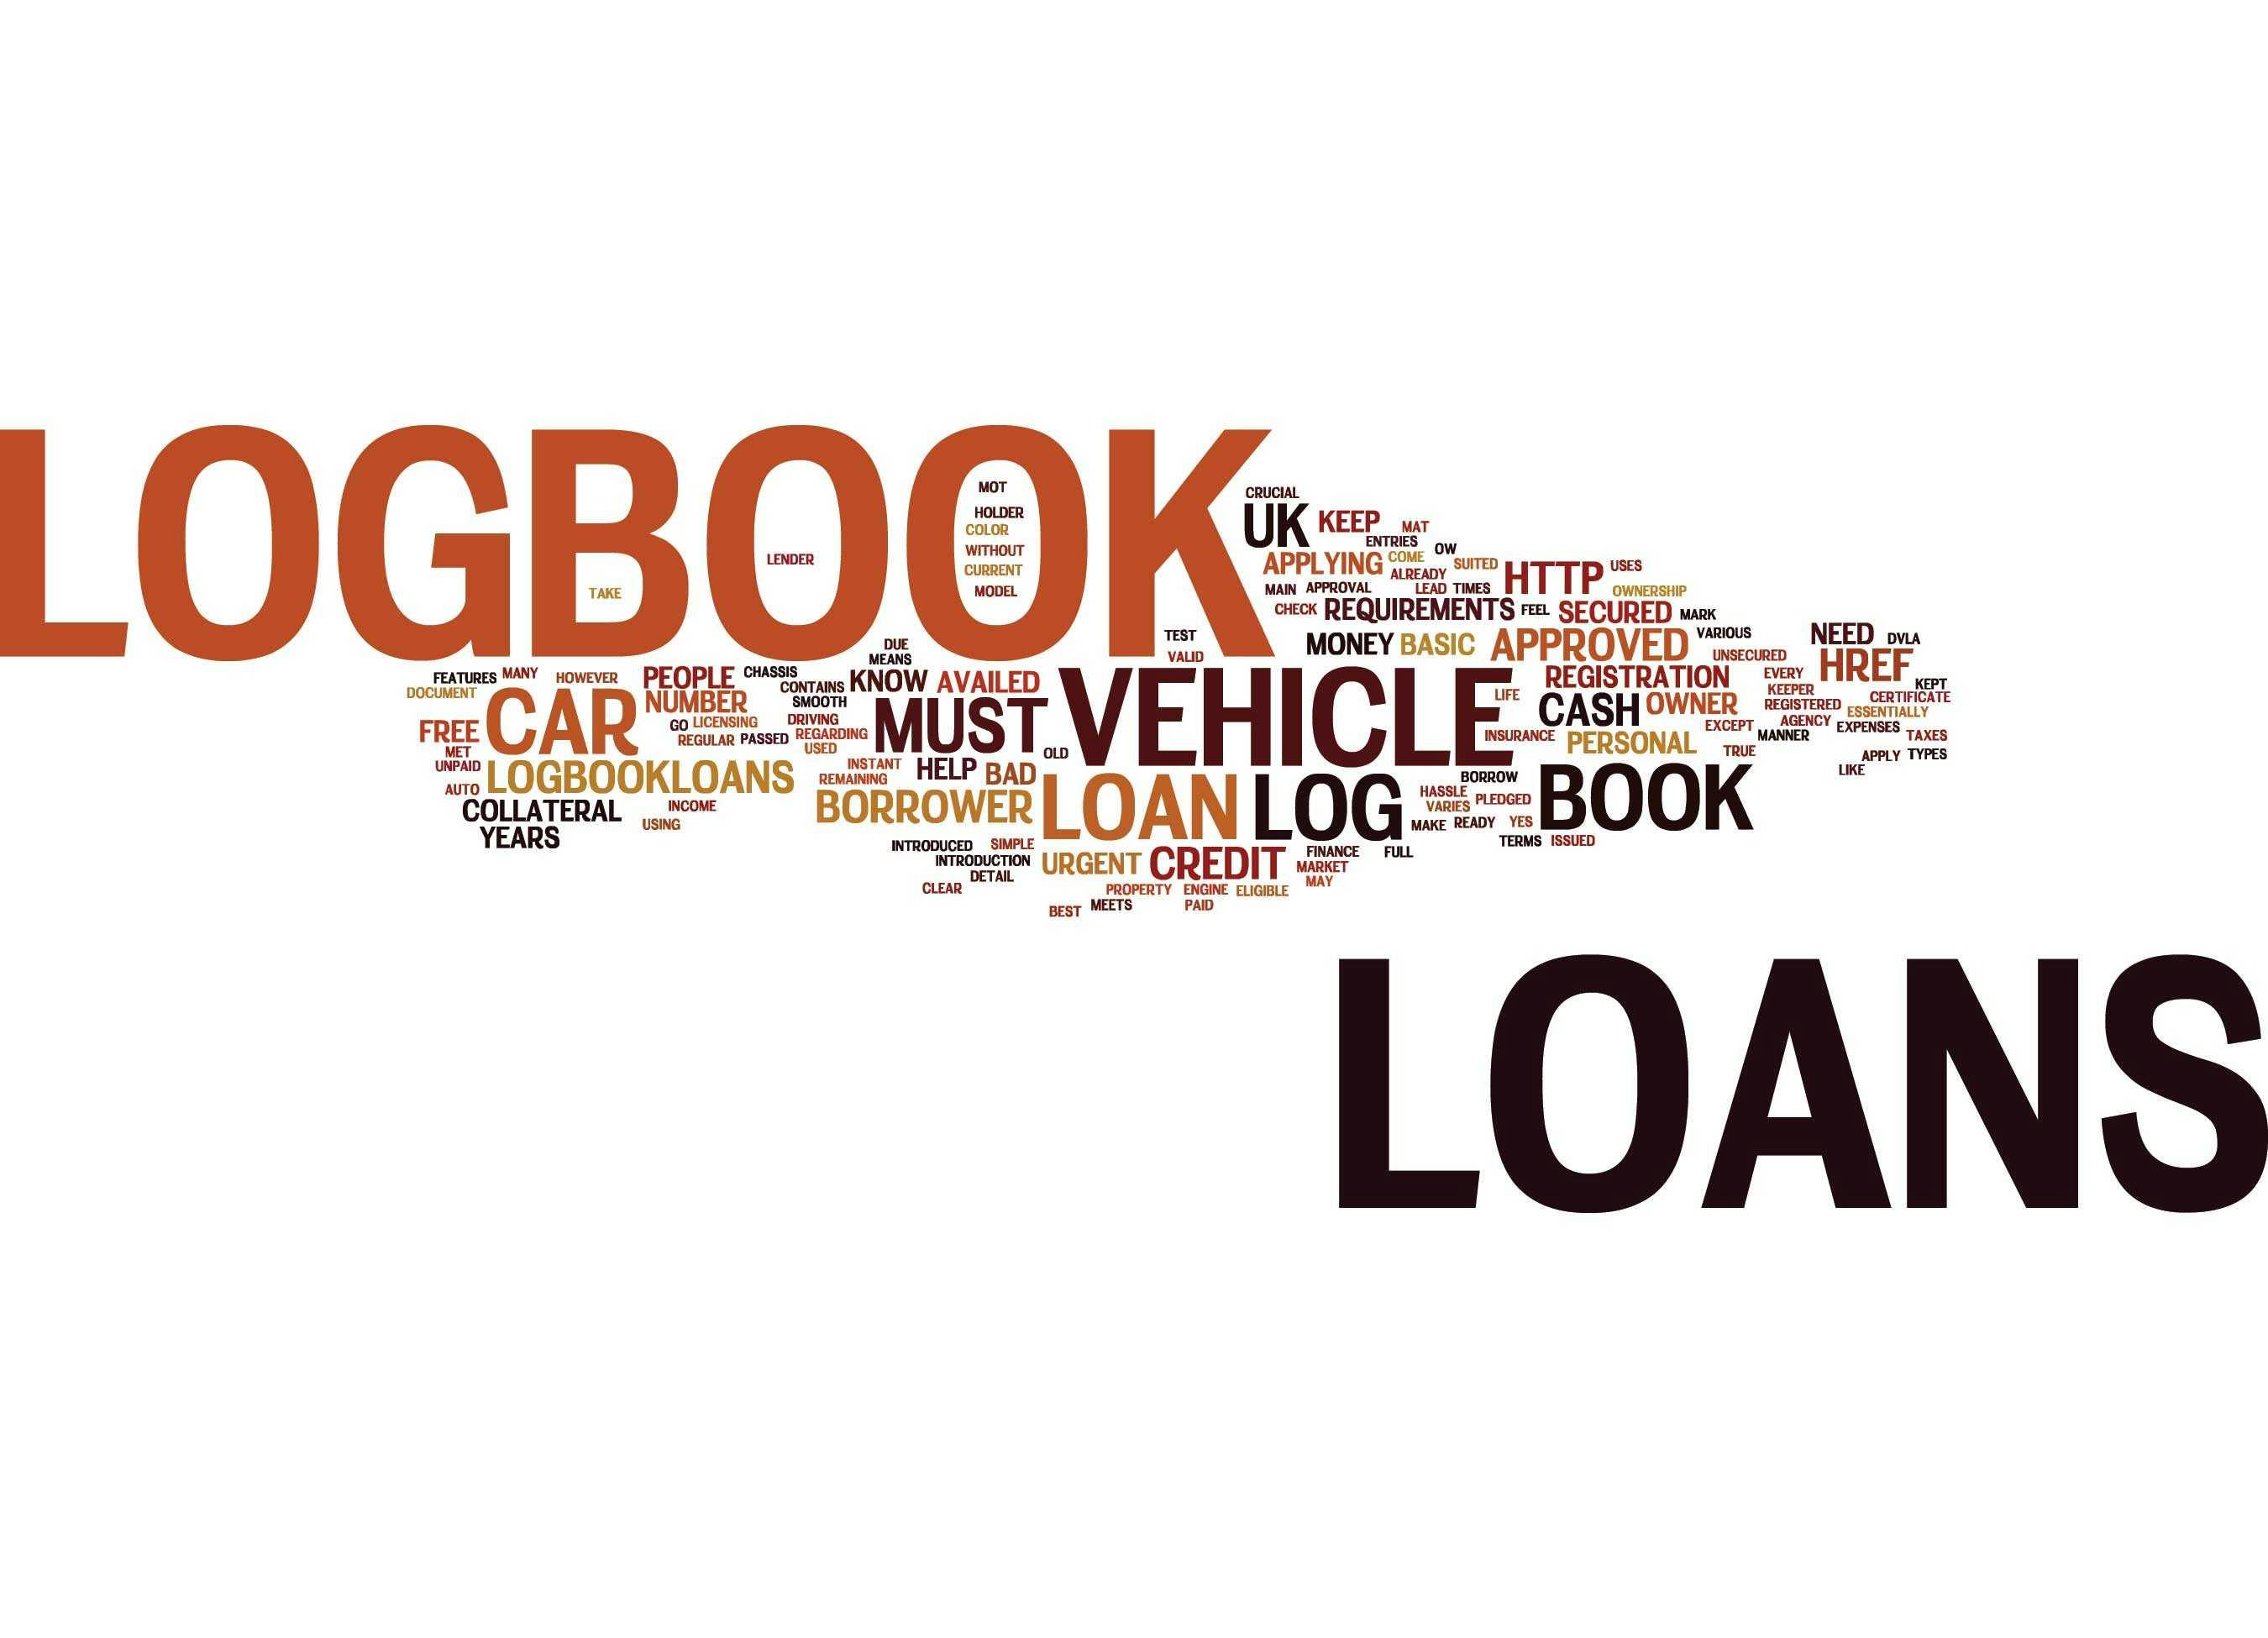 Logbook loans tag cloud